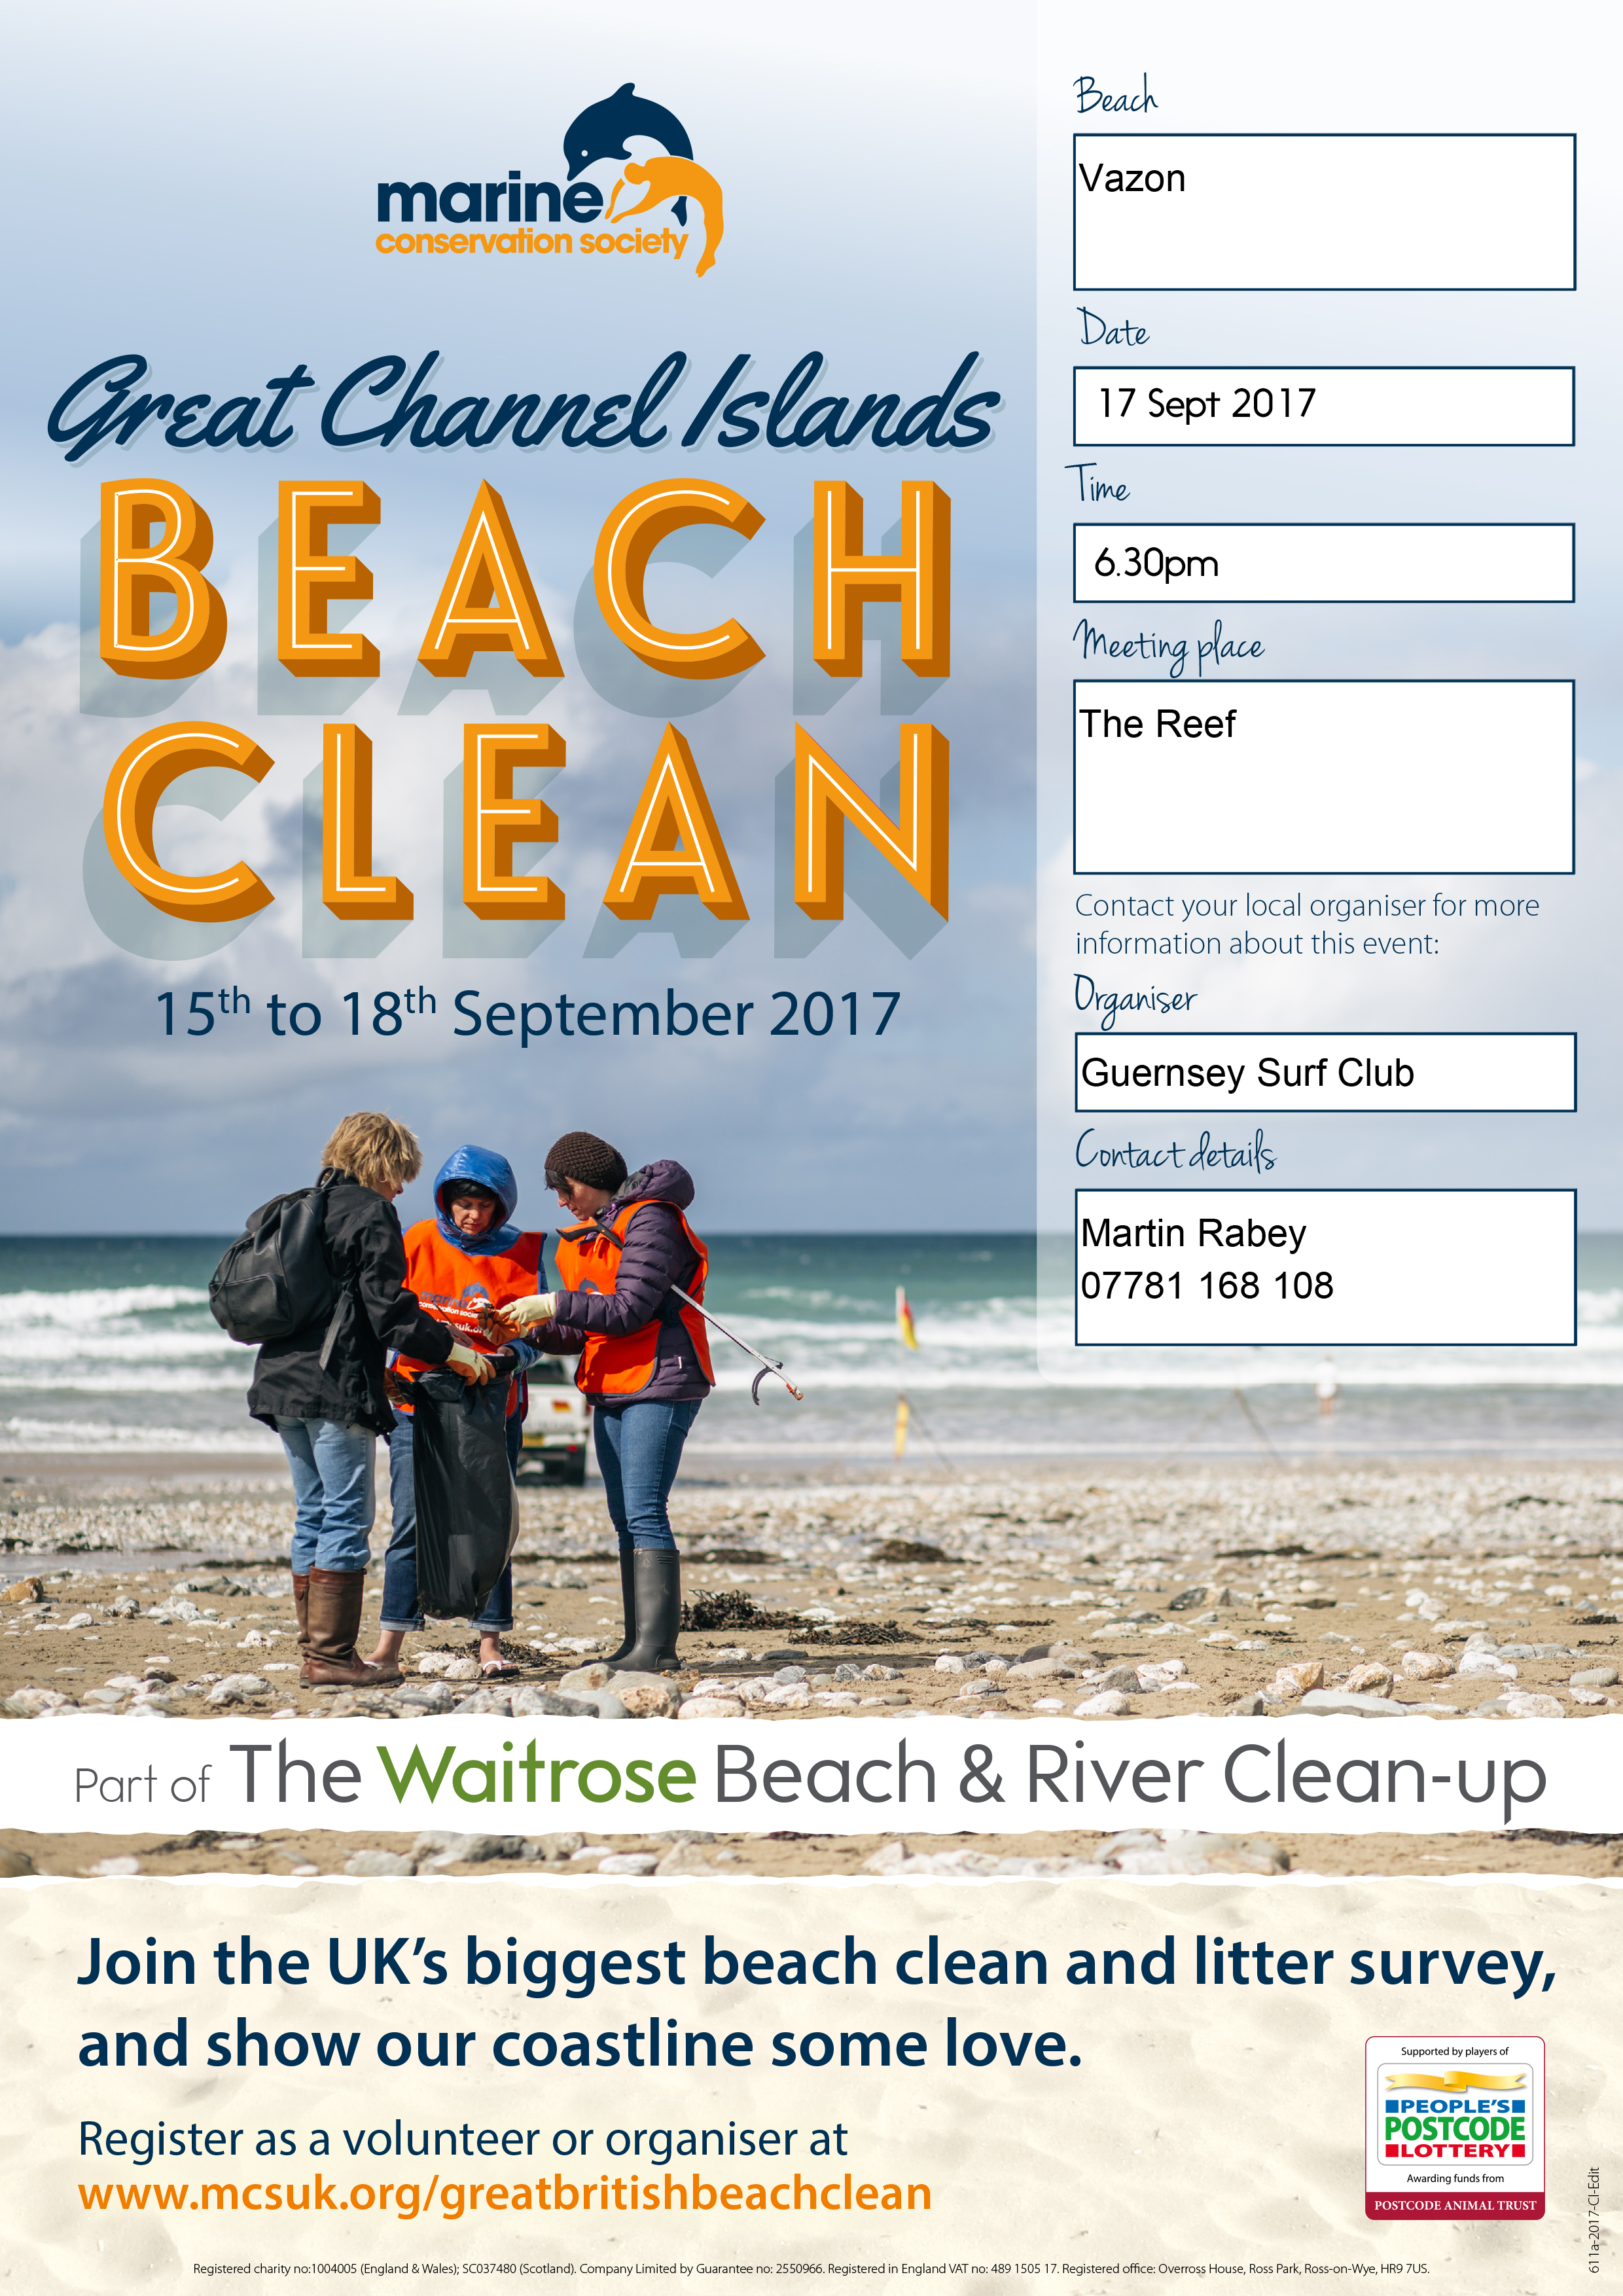 Great Channel Islands Beach Clean